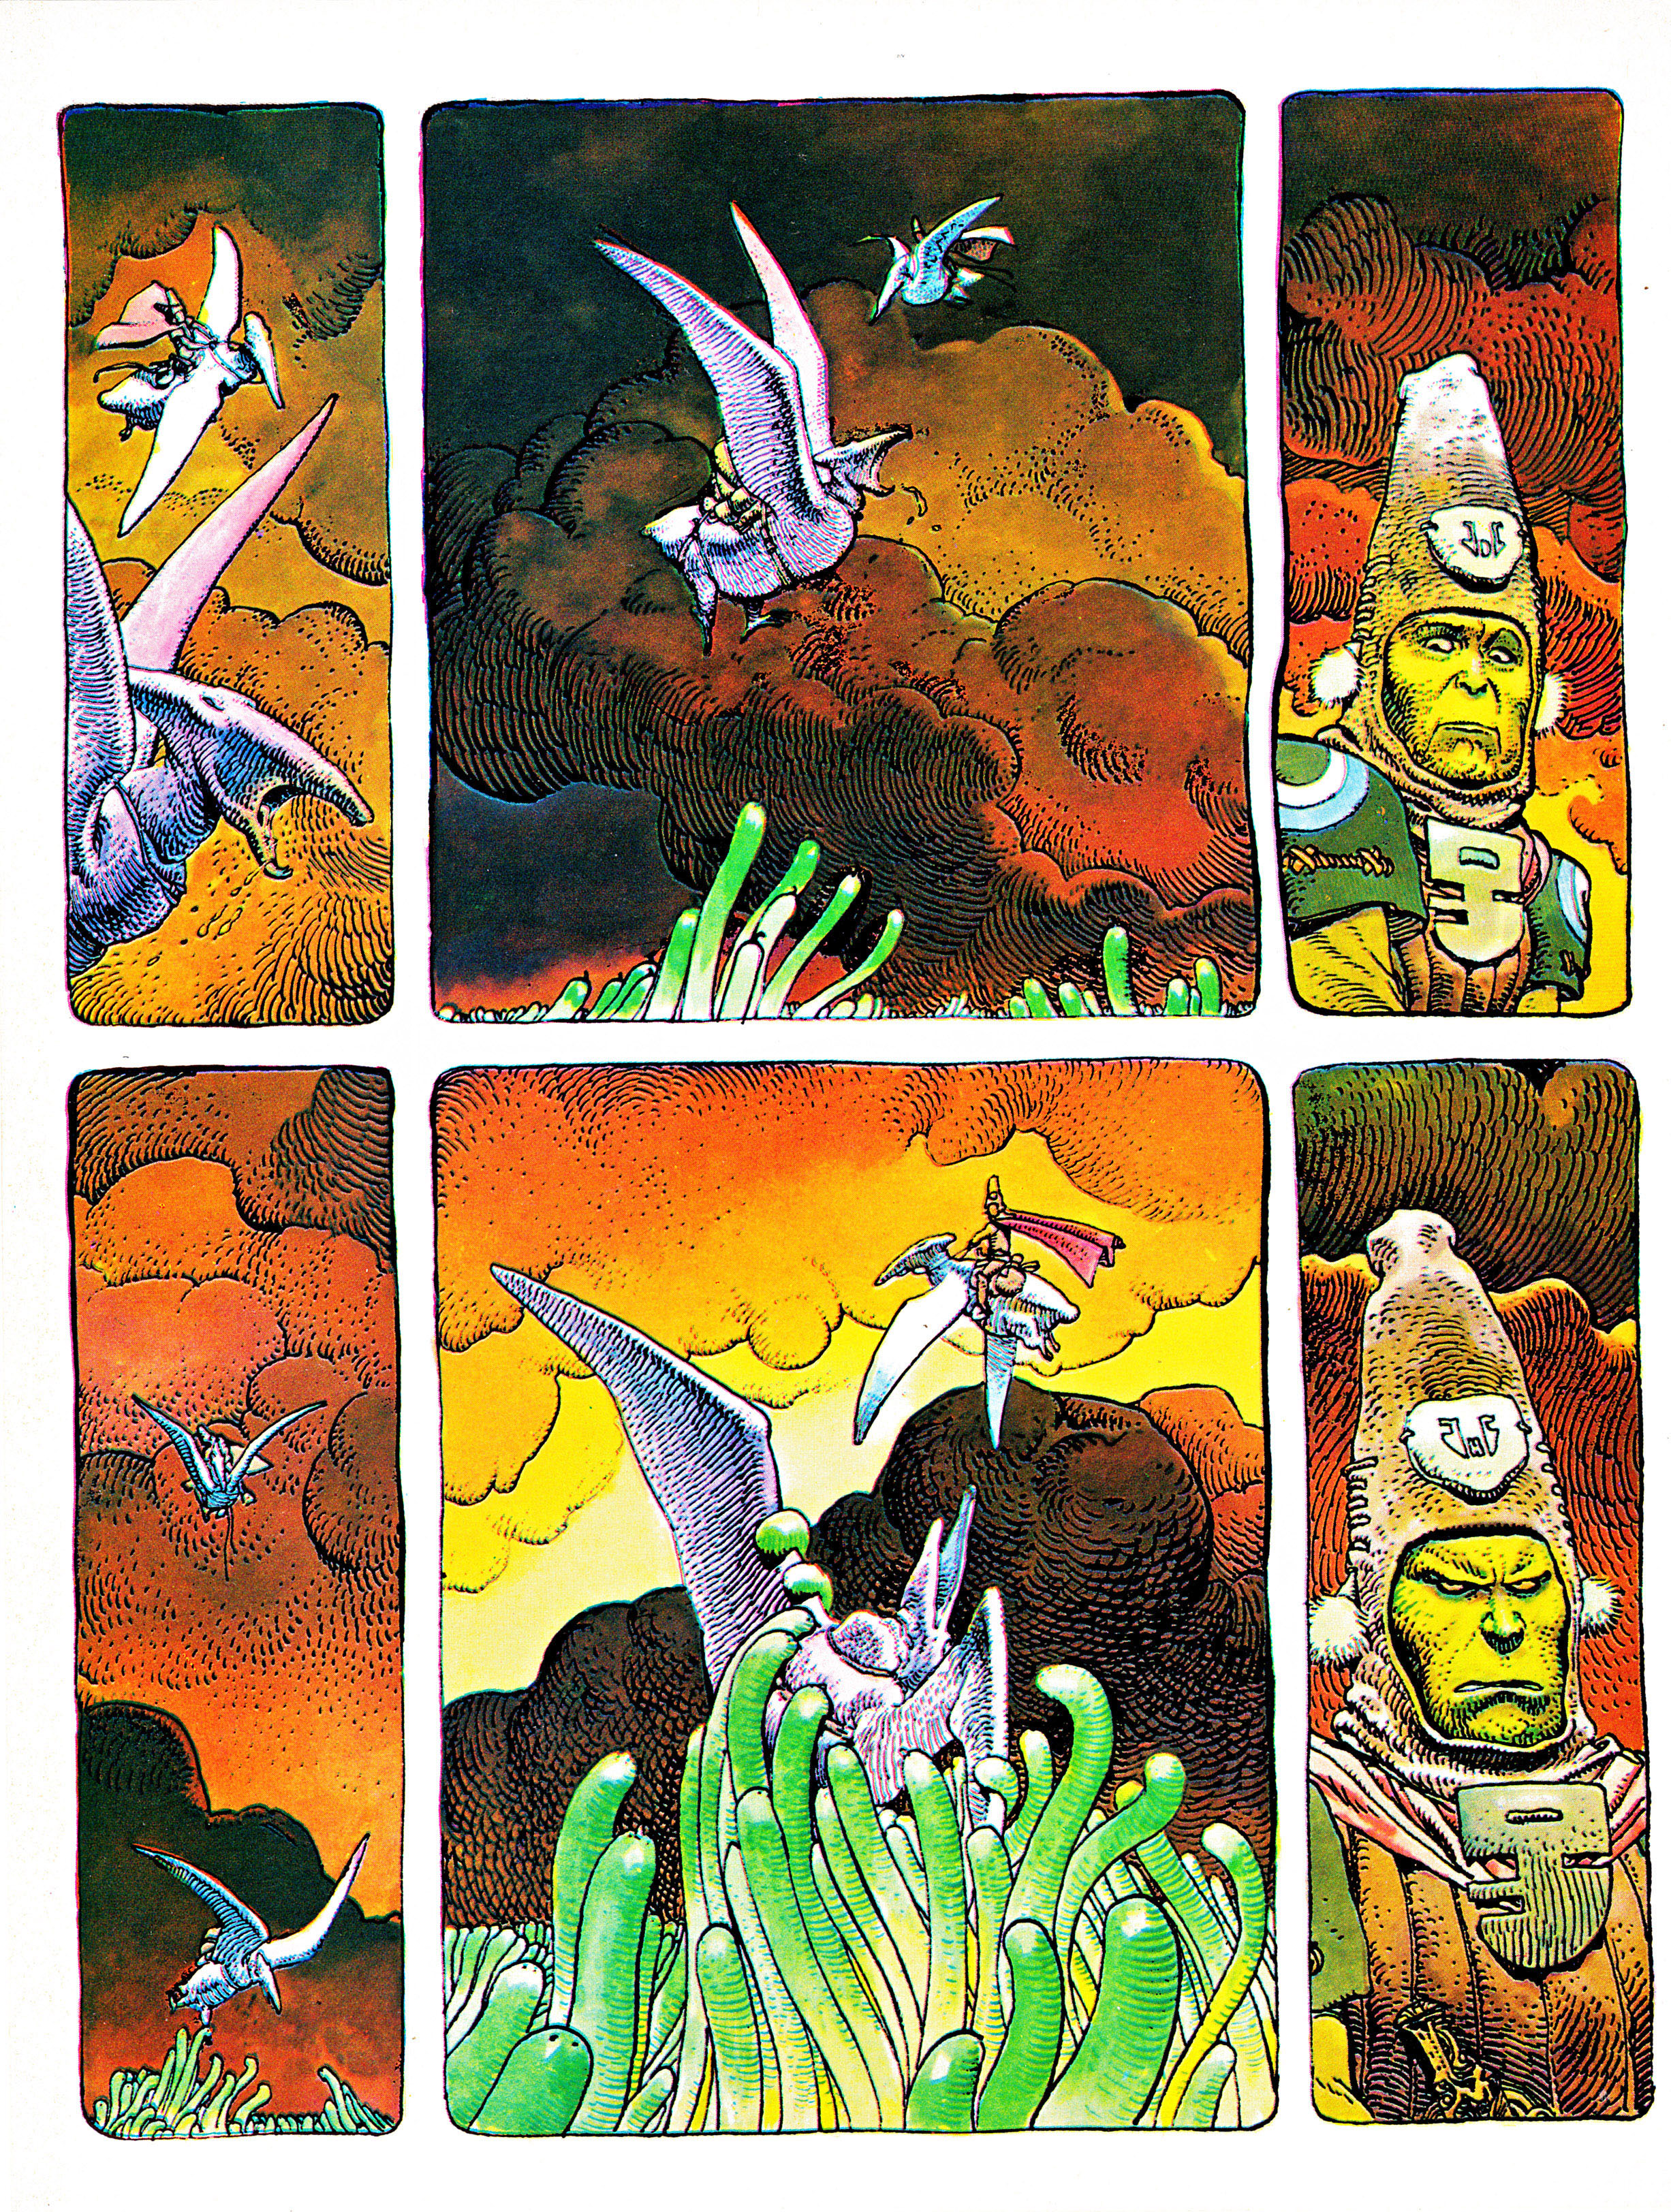 Read online Epic Graphic Novel: Moebius comic -  Issue # TPB 2 - 15